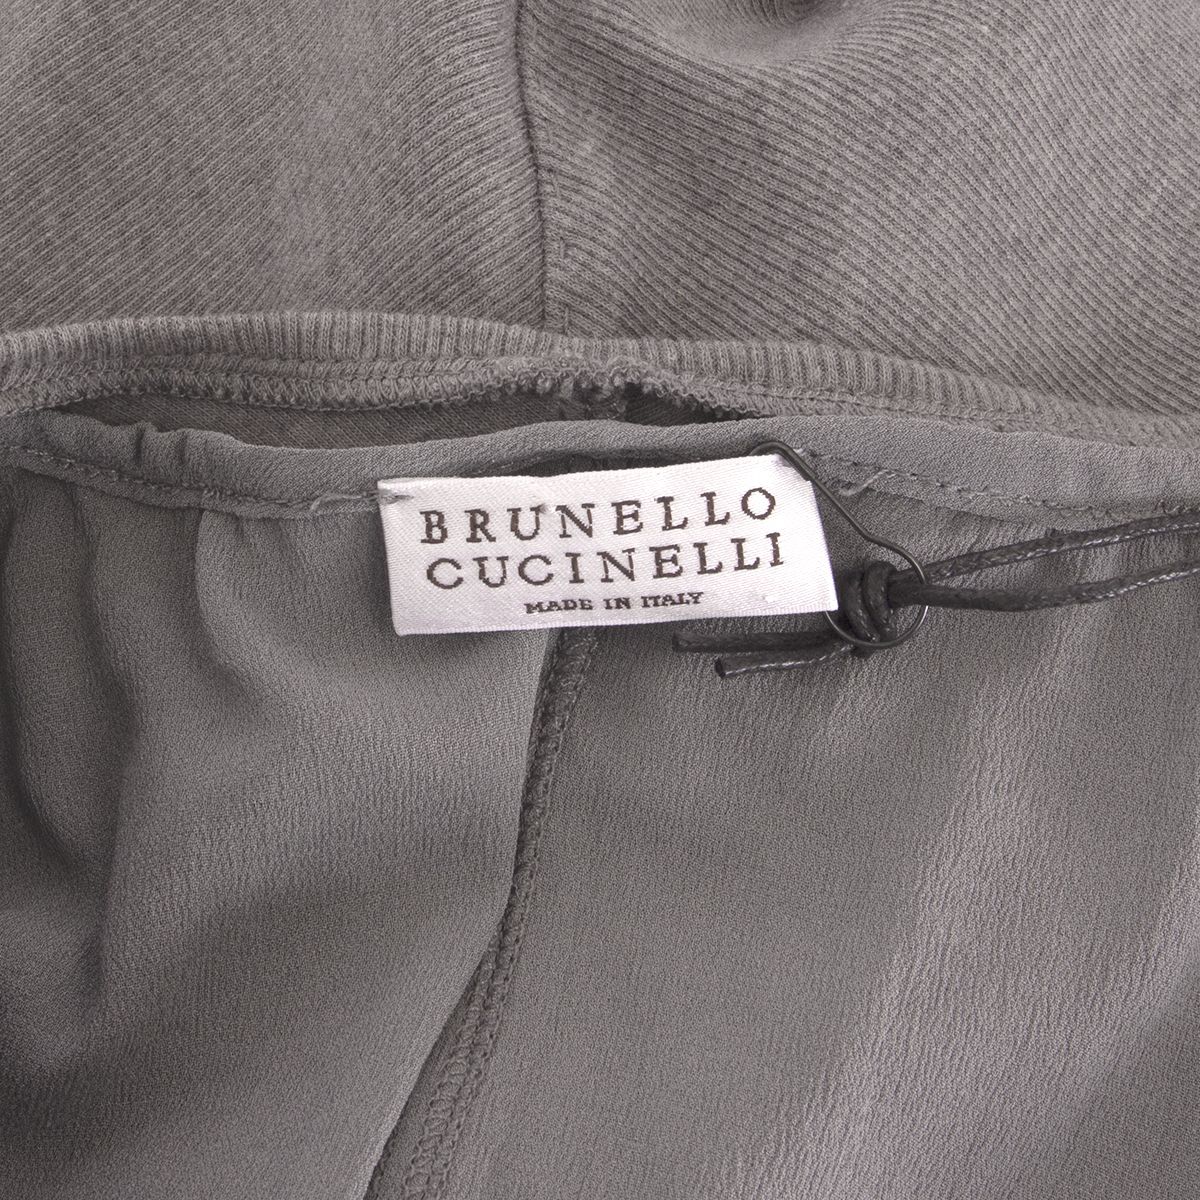 Brunello Cucinelli Sleeveless Layered Racer Back Top